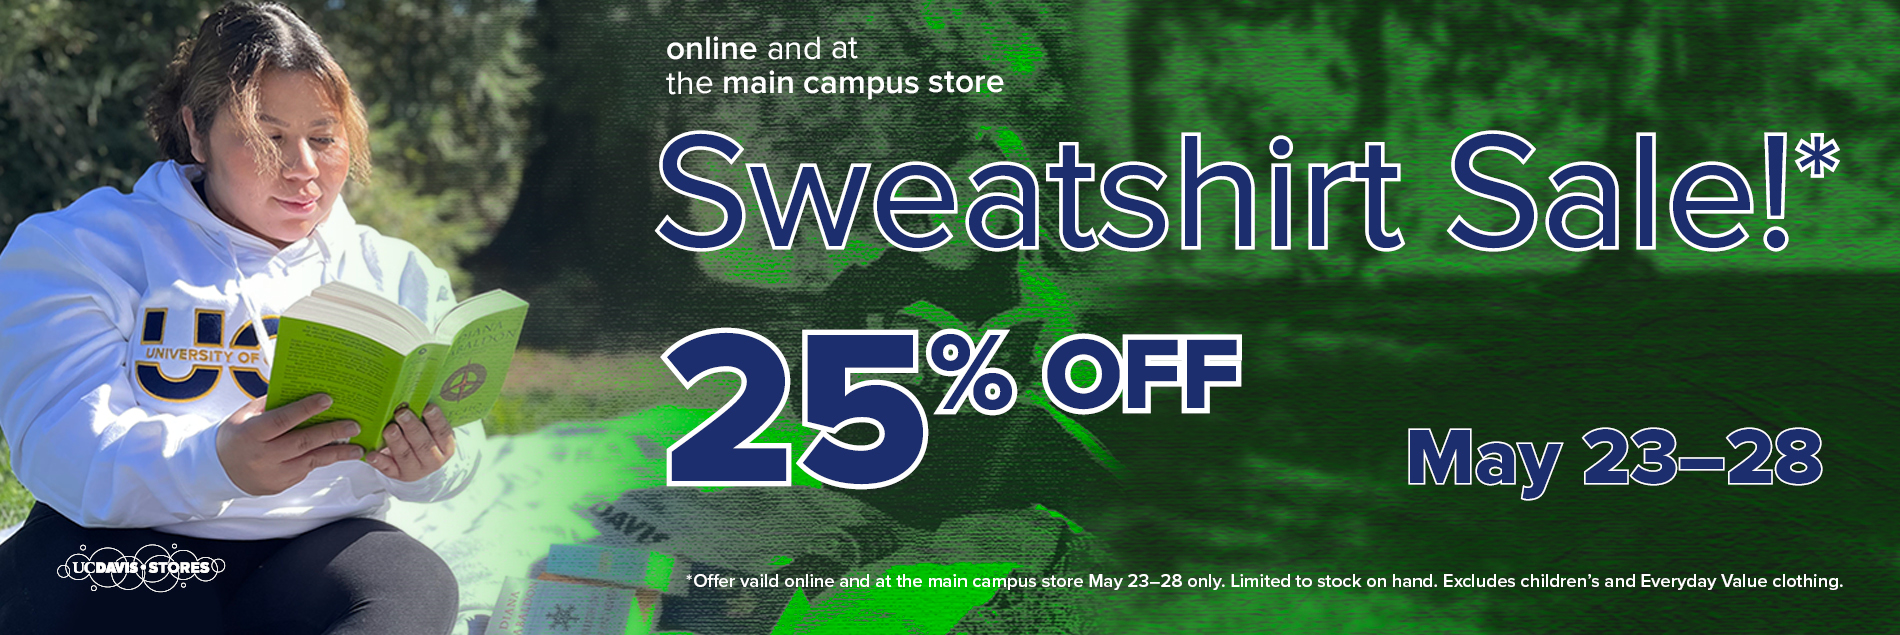 Sweatshirt Sale Promotion